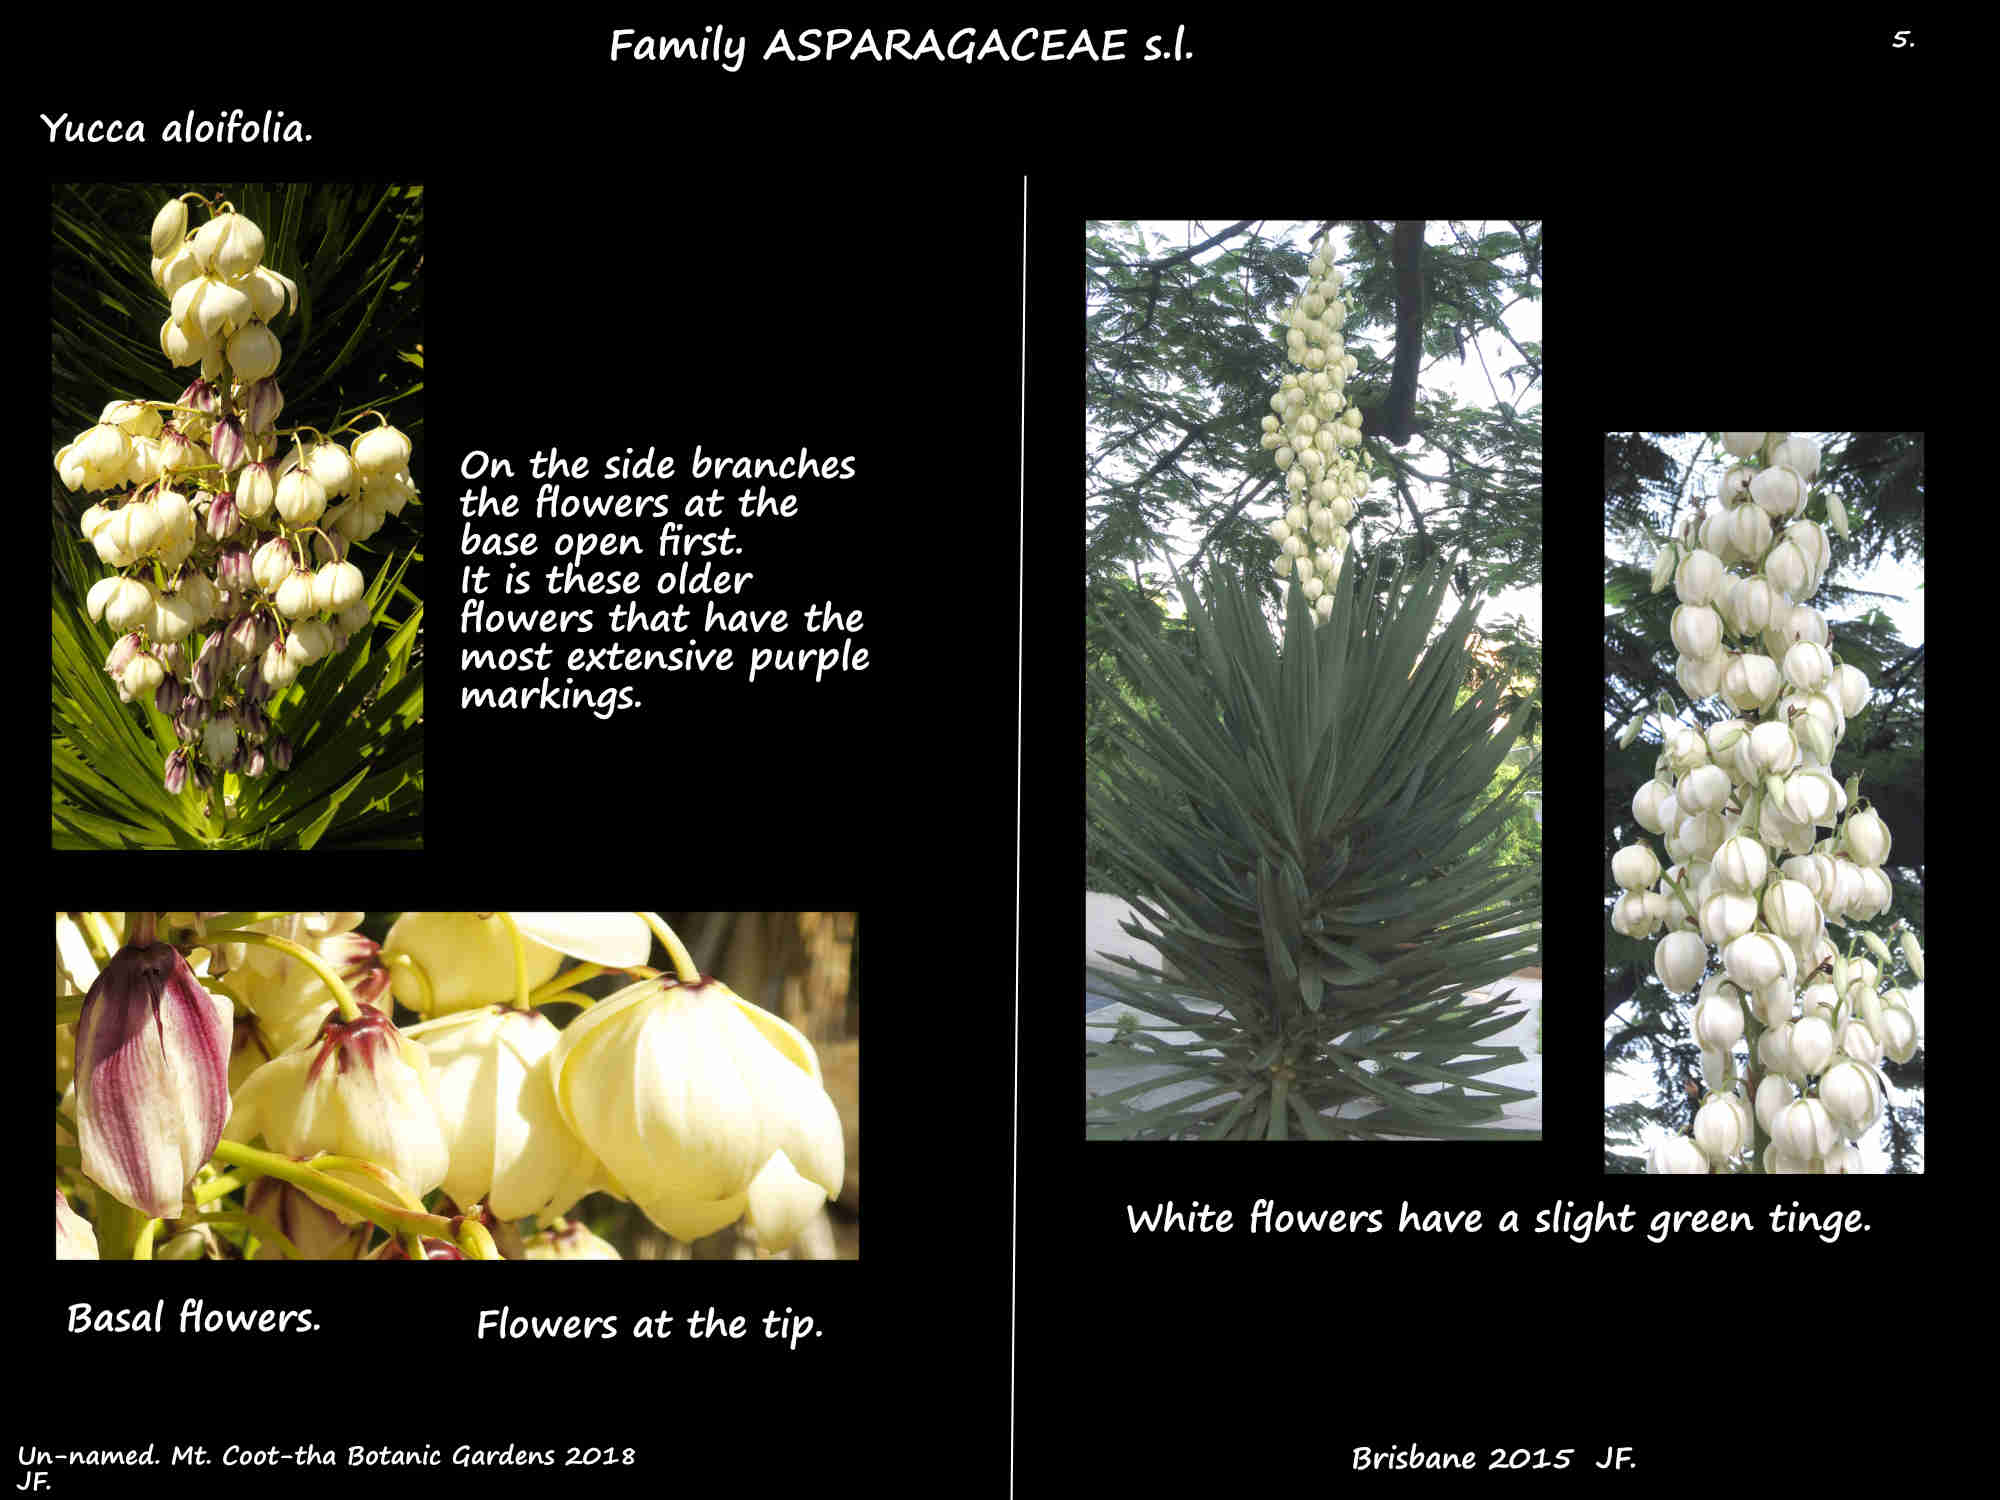 5 More Yucca aloifolia inflorescences